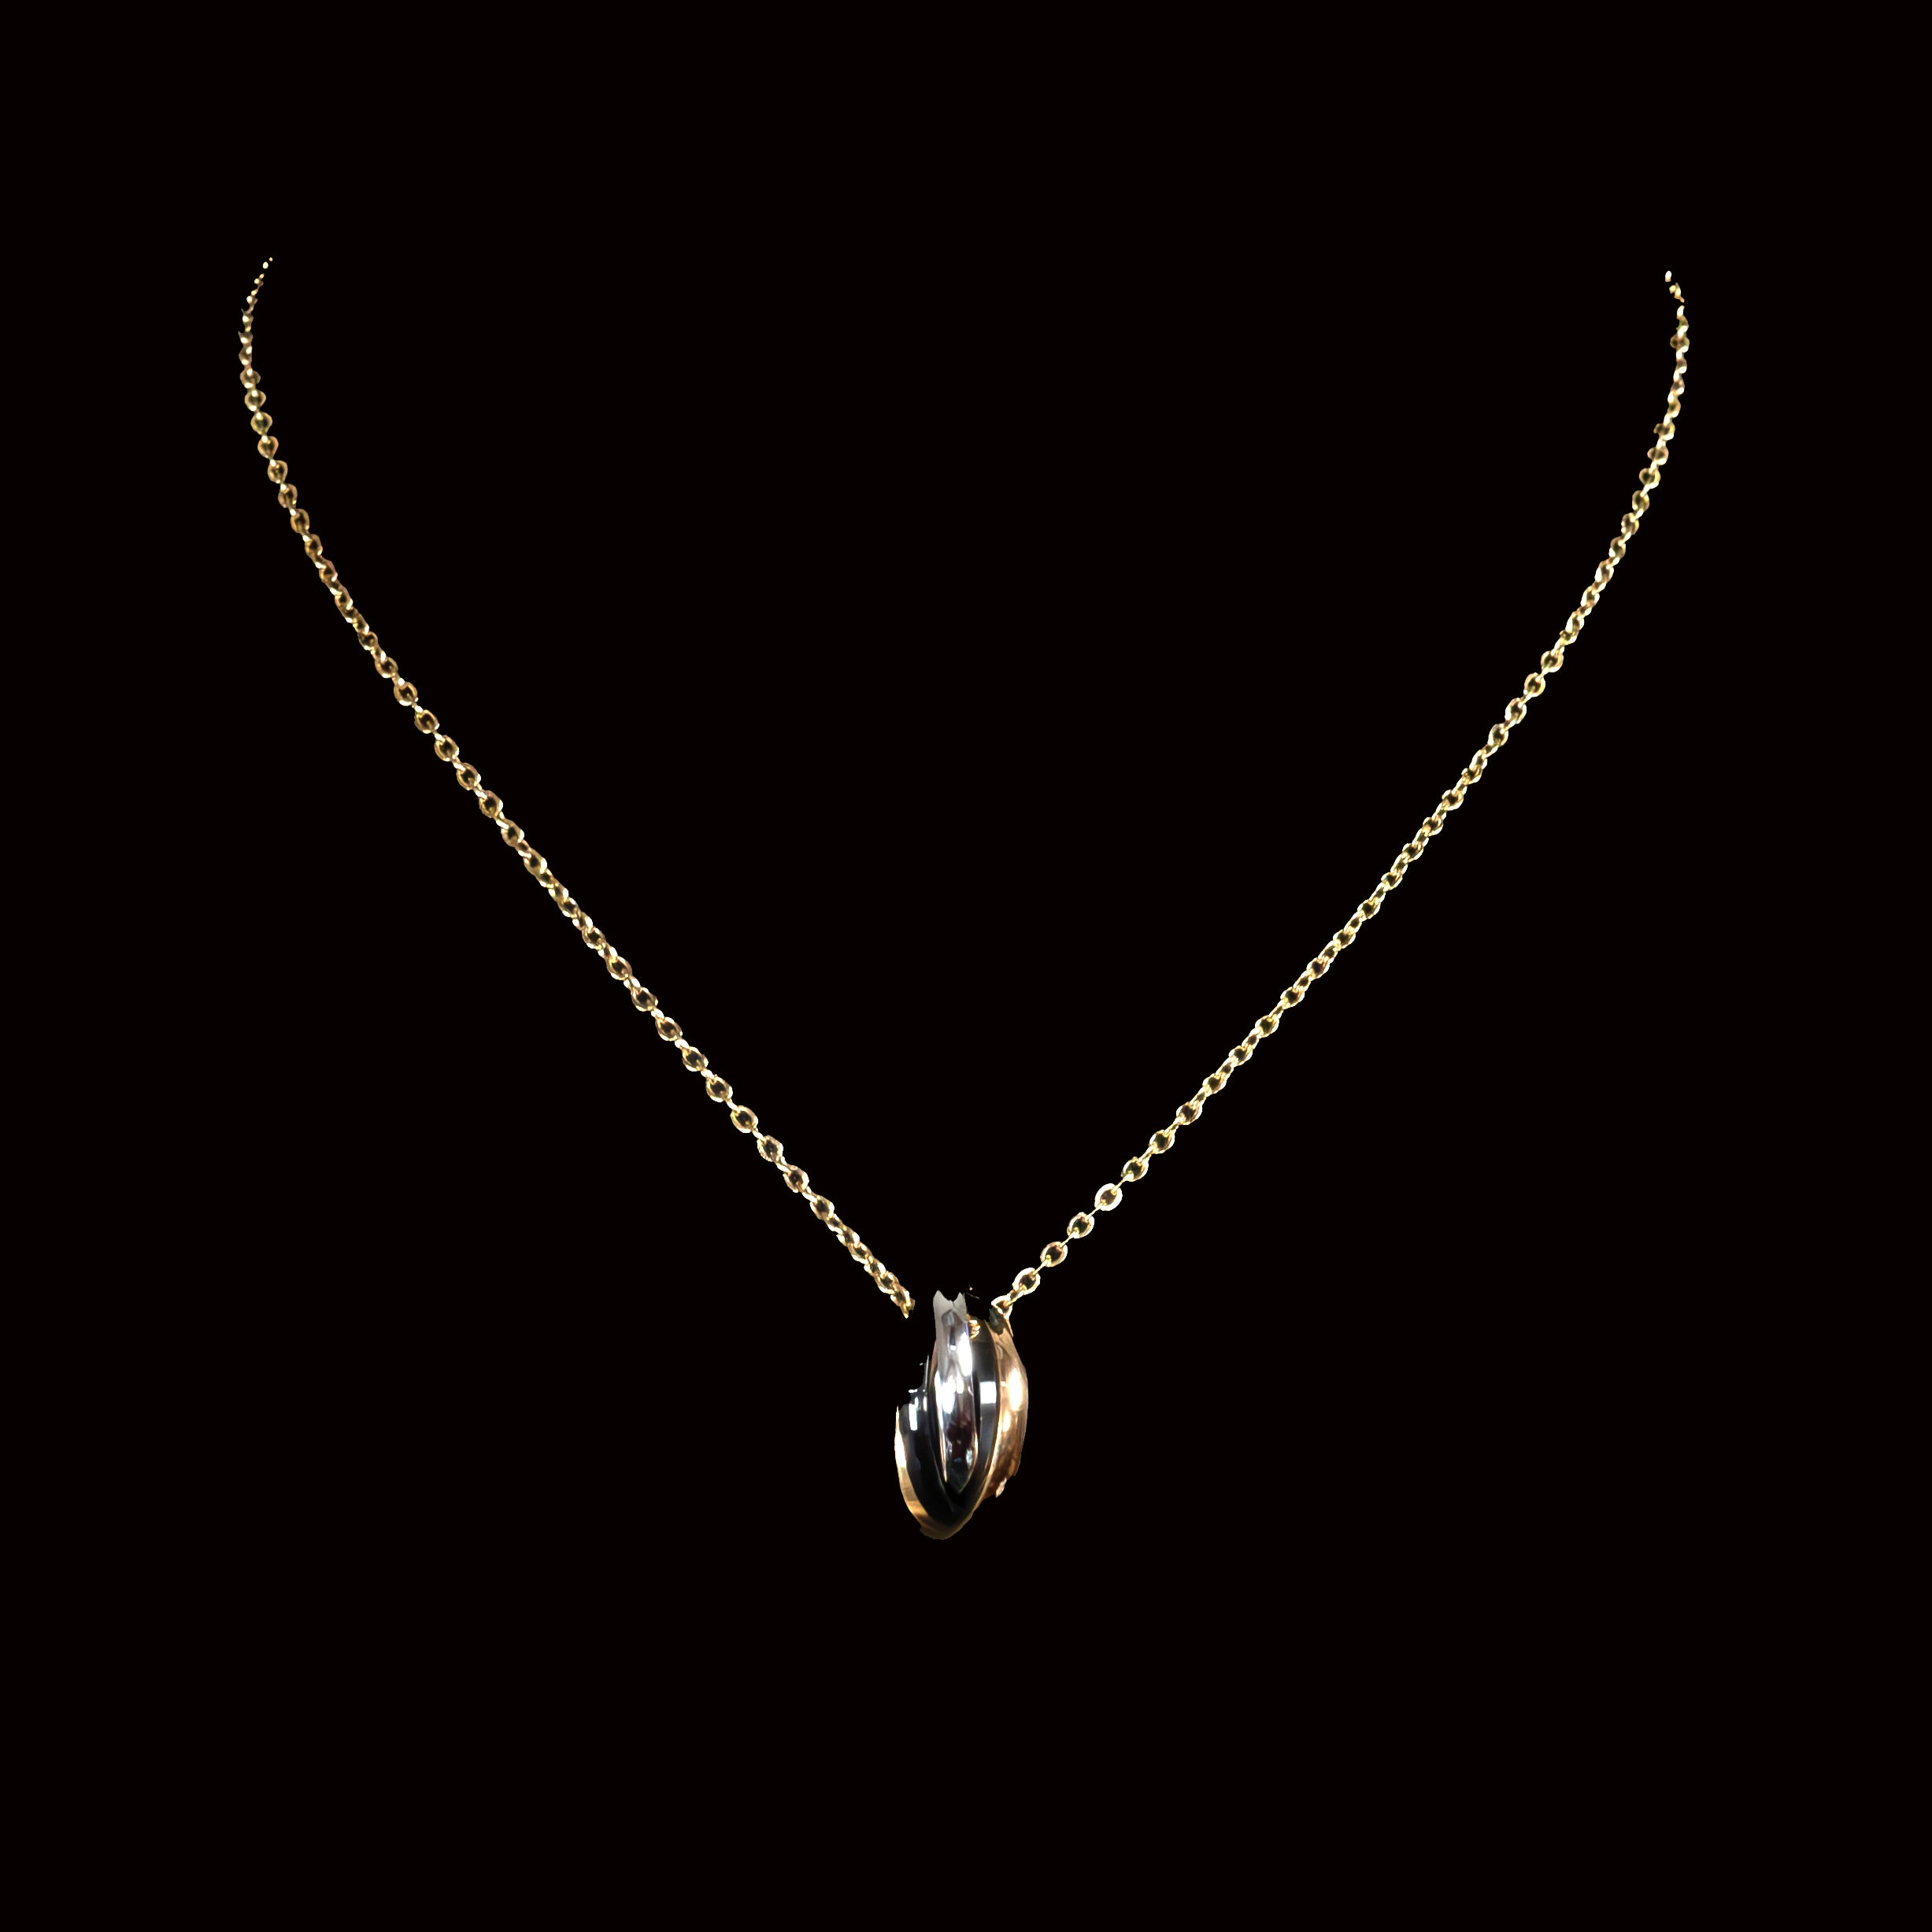 Homero Stainless Steel Necklace with Interlock Pendant